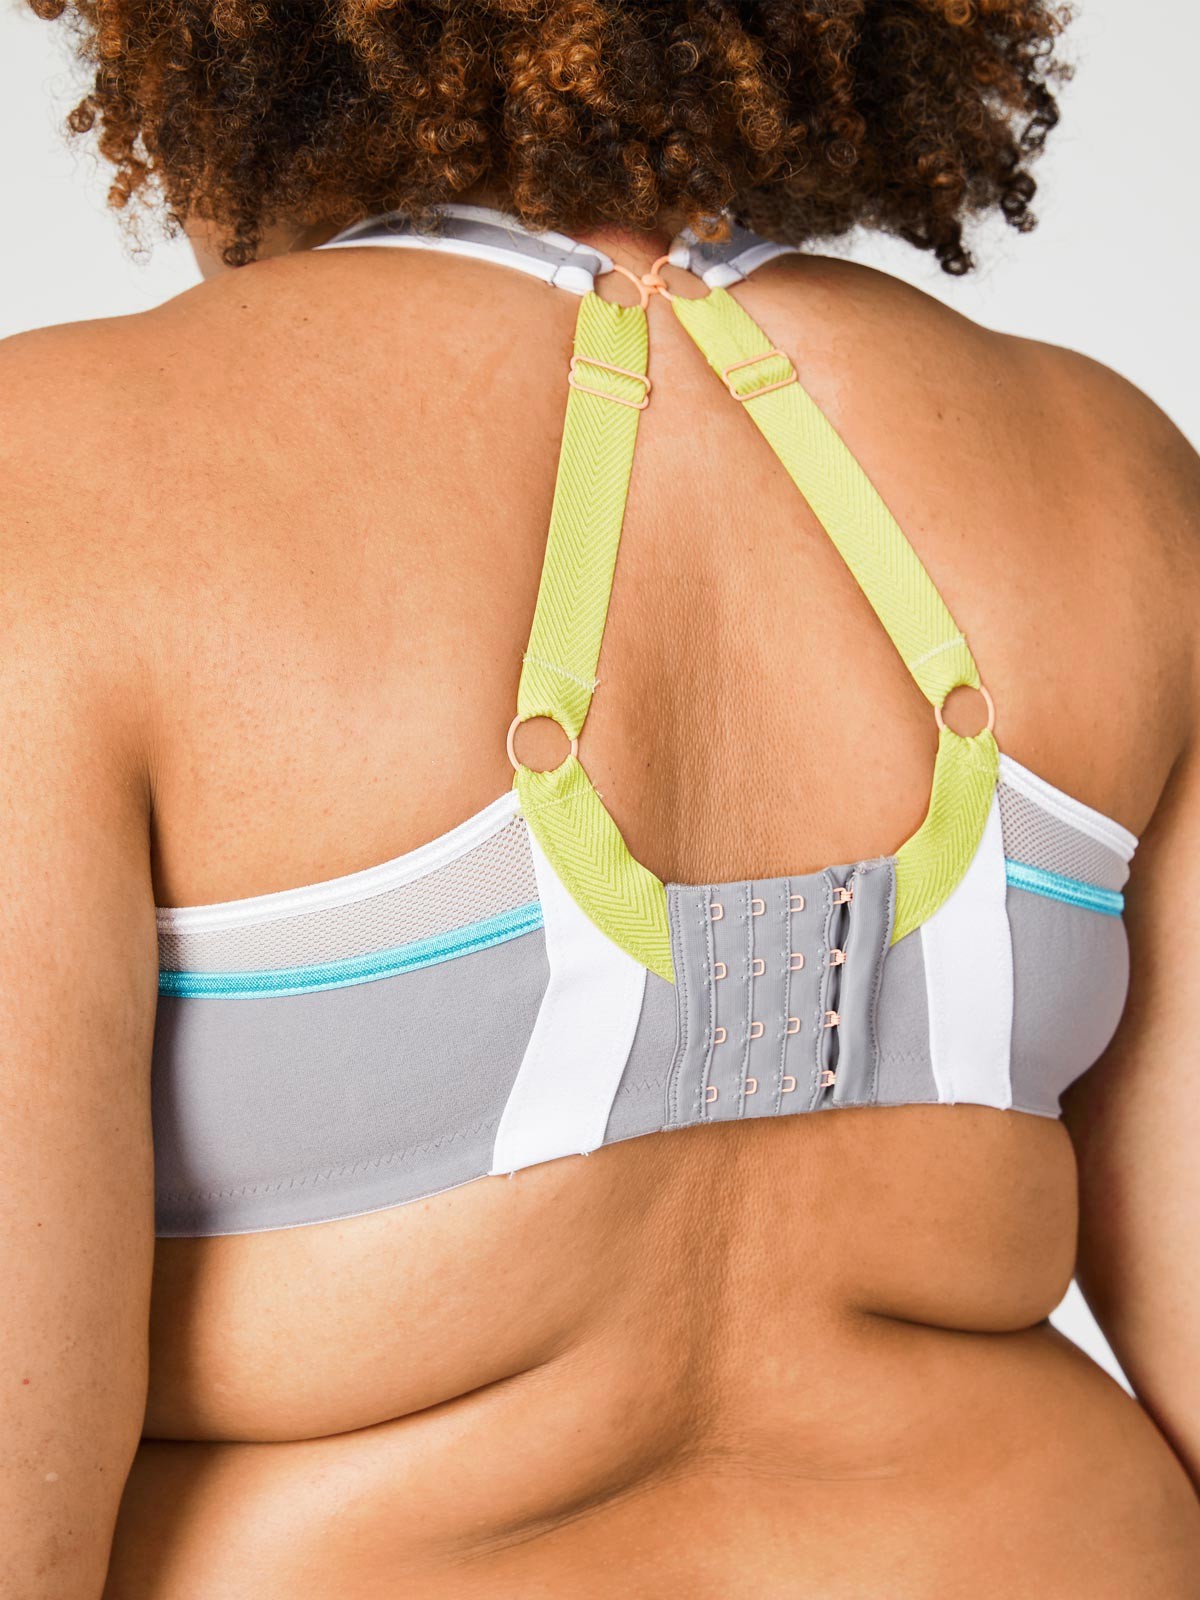 + Parley printed stretch recycled nursing bra